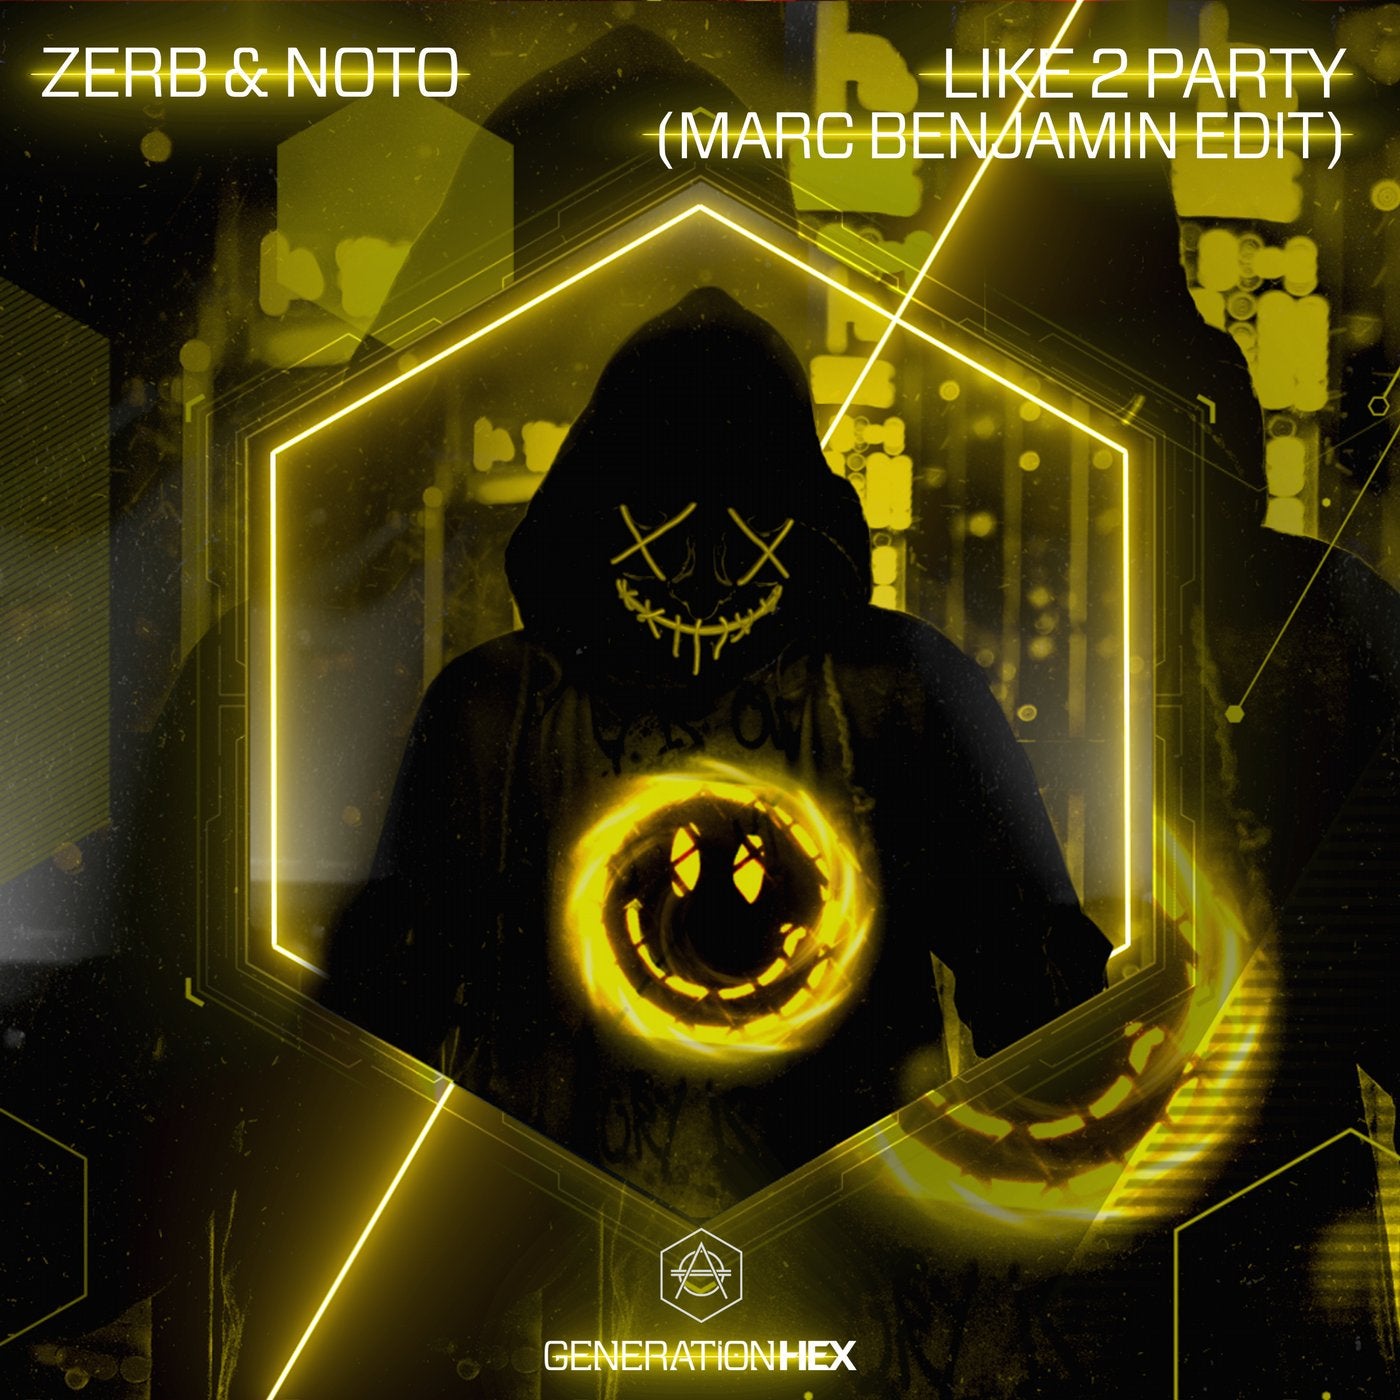 Zerb music download - Beatport